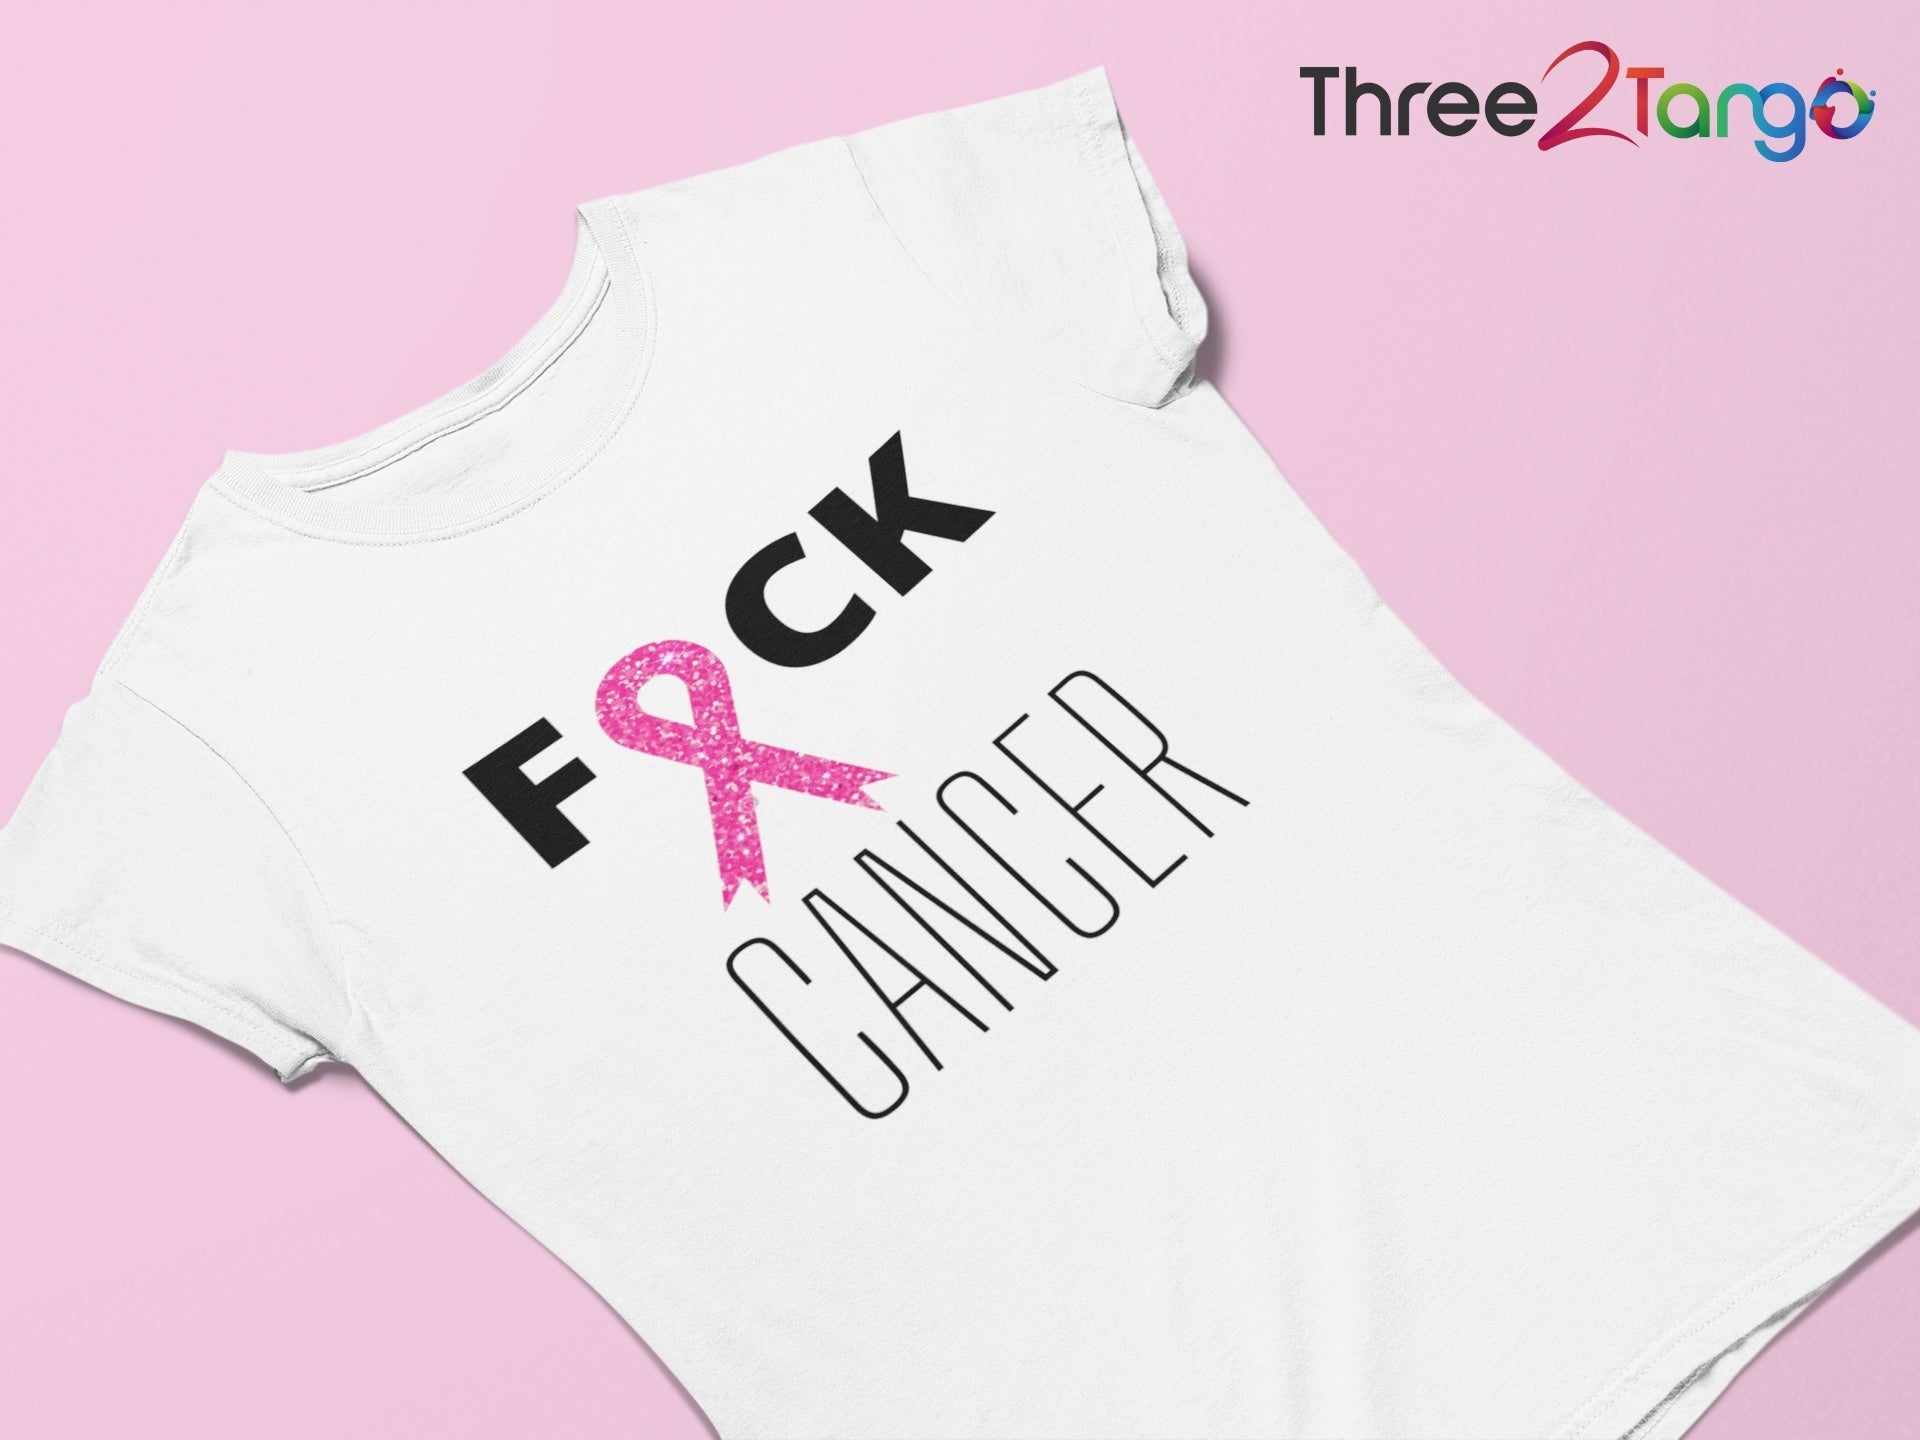 F*ck Cancer T-shirt | Breast Cancer Awareness Shirt - Three2Tango Tee's